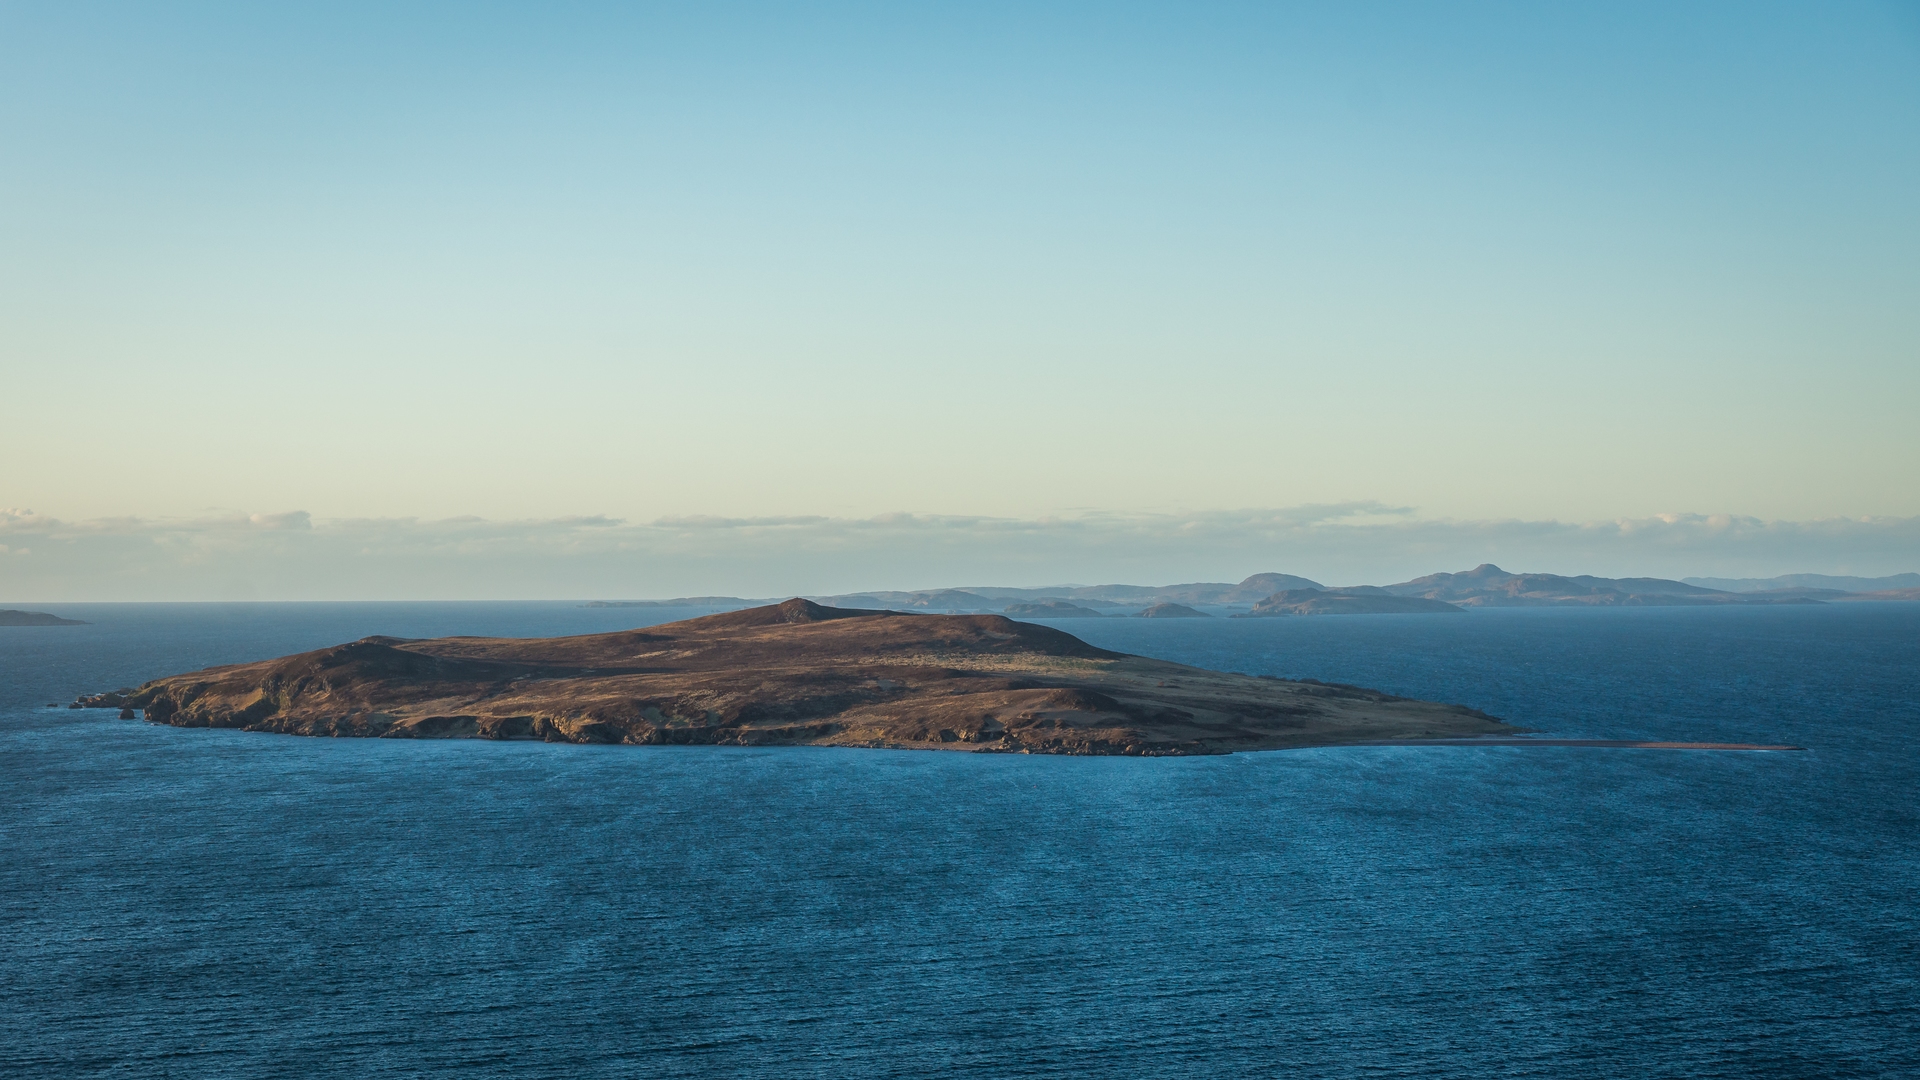 A view of Gruinard Island on the west coast of Scotland.